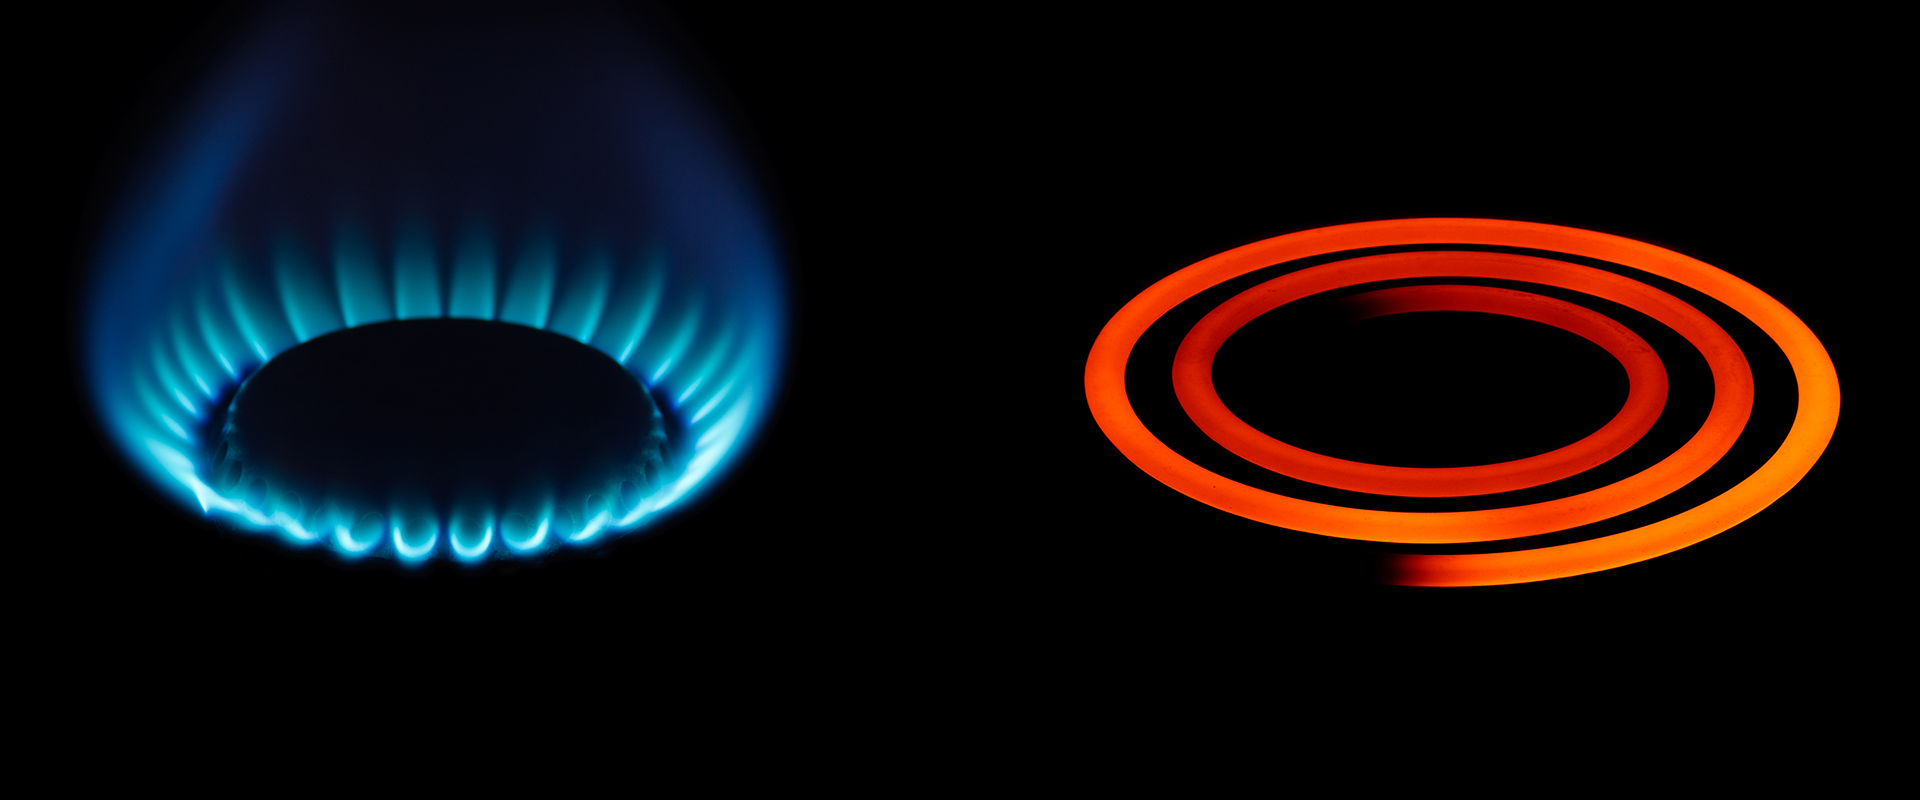 Electricité ou gaz propane